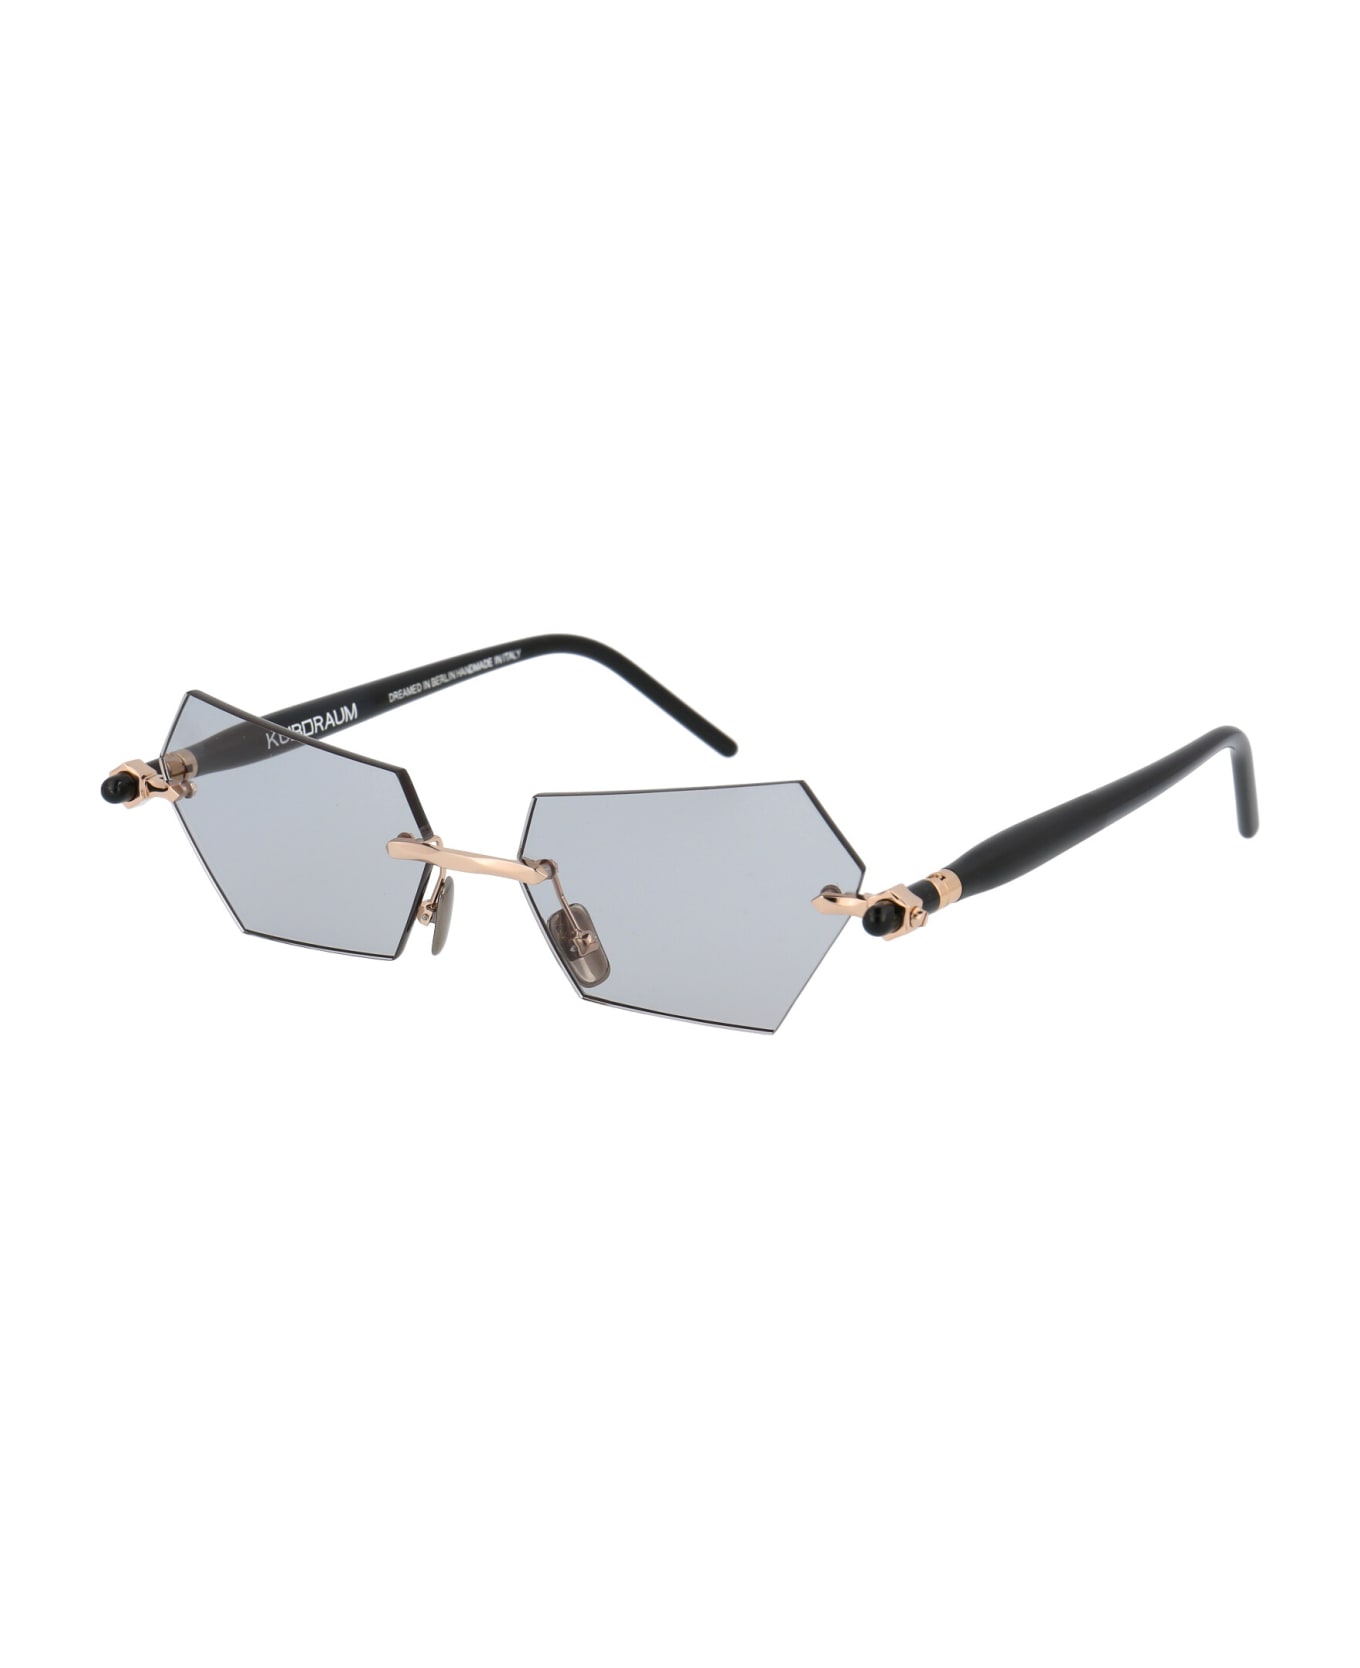 Kuboraum Maske P51 Sunglasses - PG BB grey1